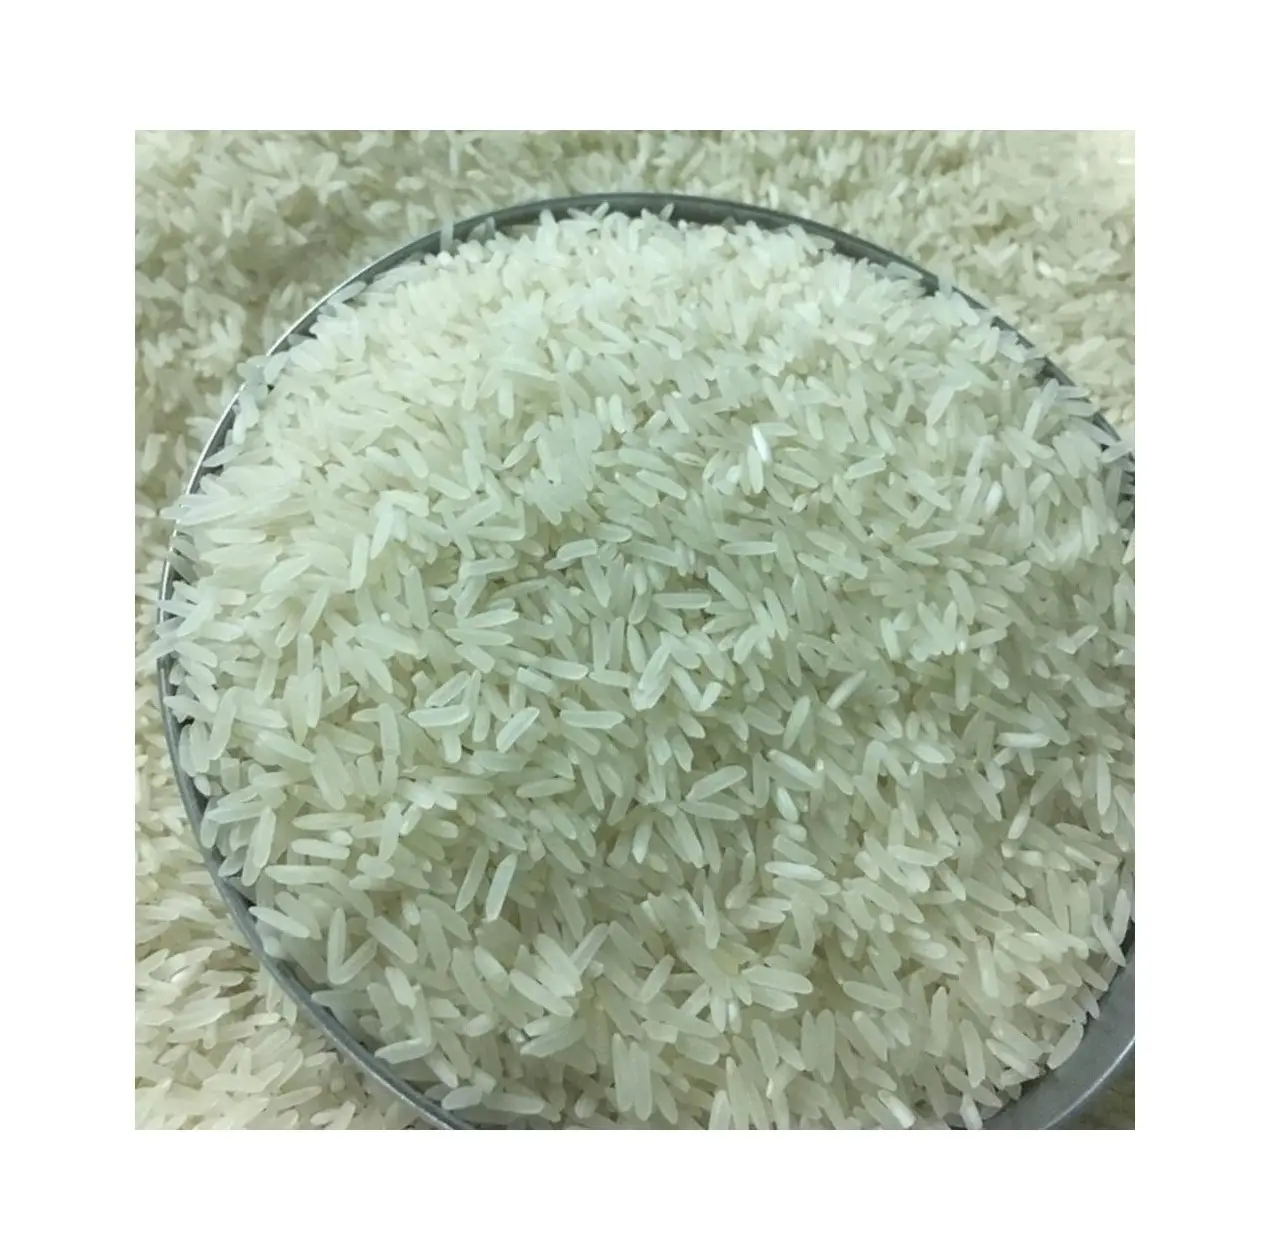 Yasemin pirinç/uzun tahıl kokulu pirinç/beyaz pirinç